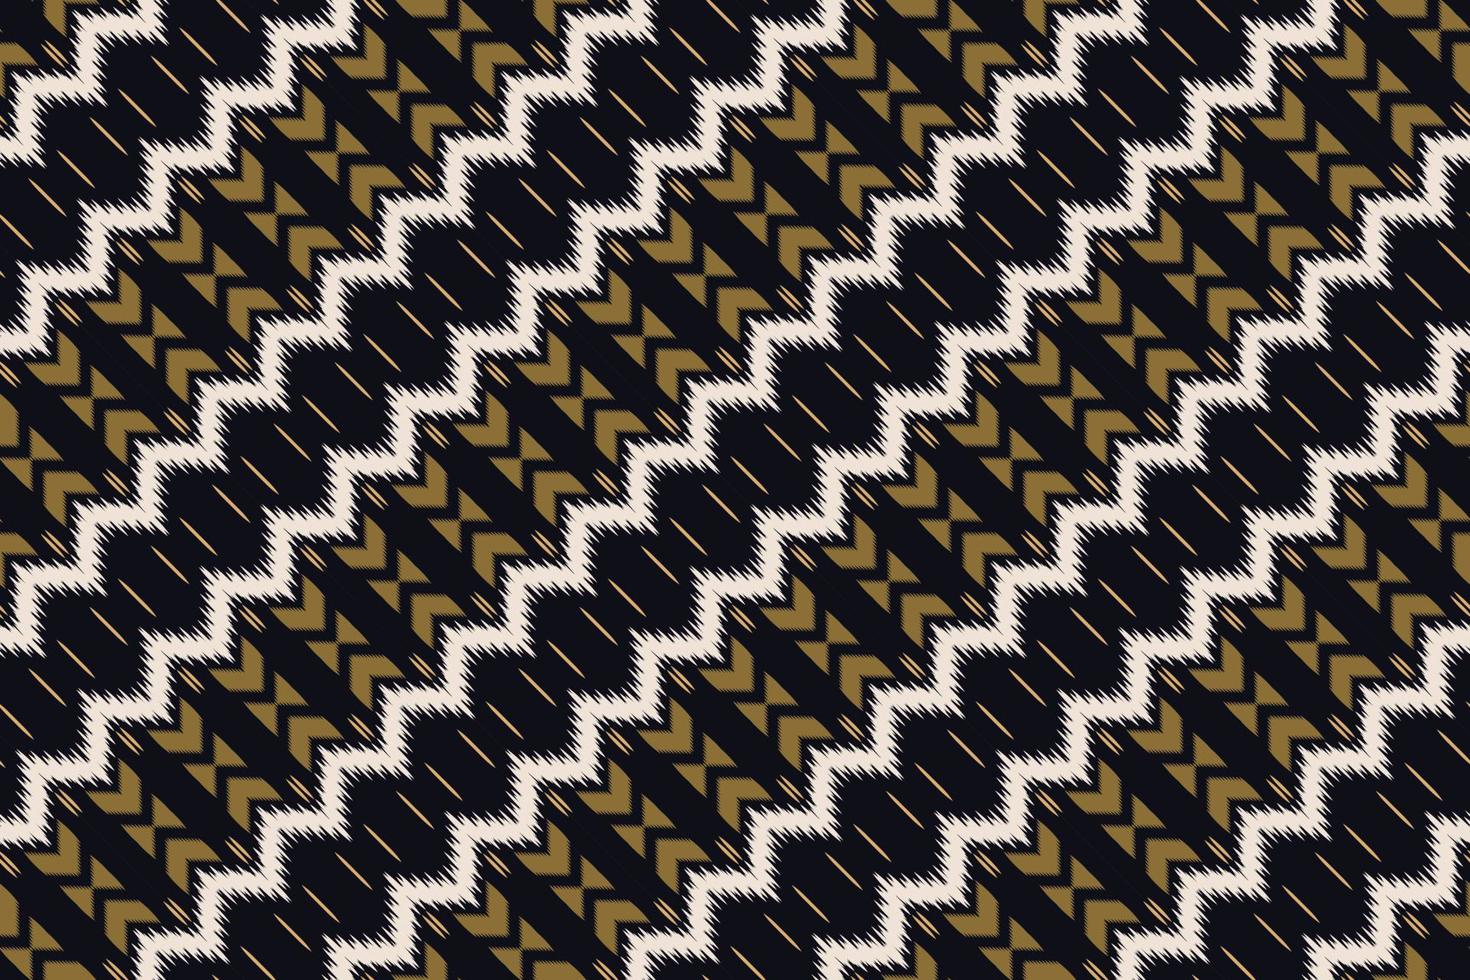 ikat tejido tribal patrón abstracto sin fisuras. étnico geométrico ikkat batik vector digital diseño textil para estampados tela sari mughal cepillo símbolo franjas textura kurti kurtis kurtas